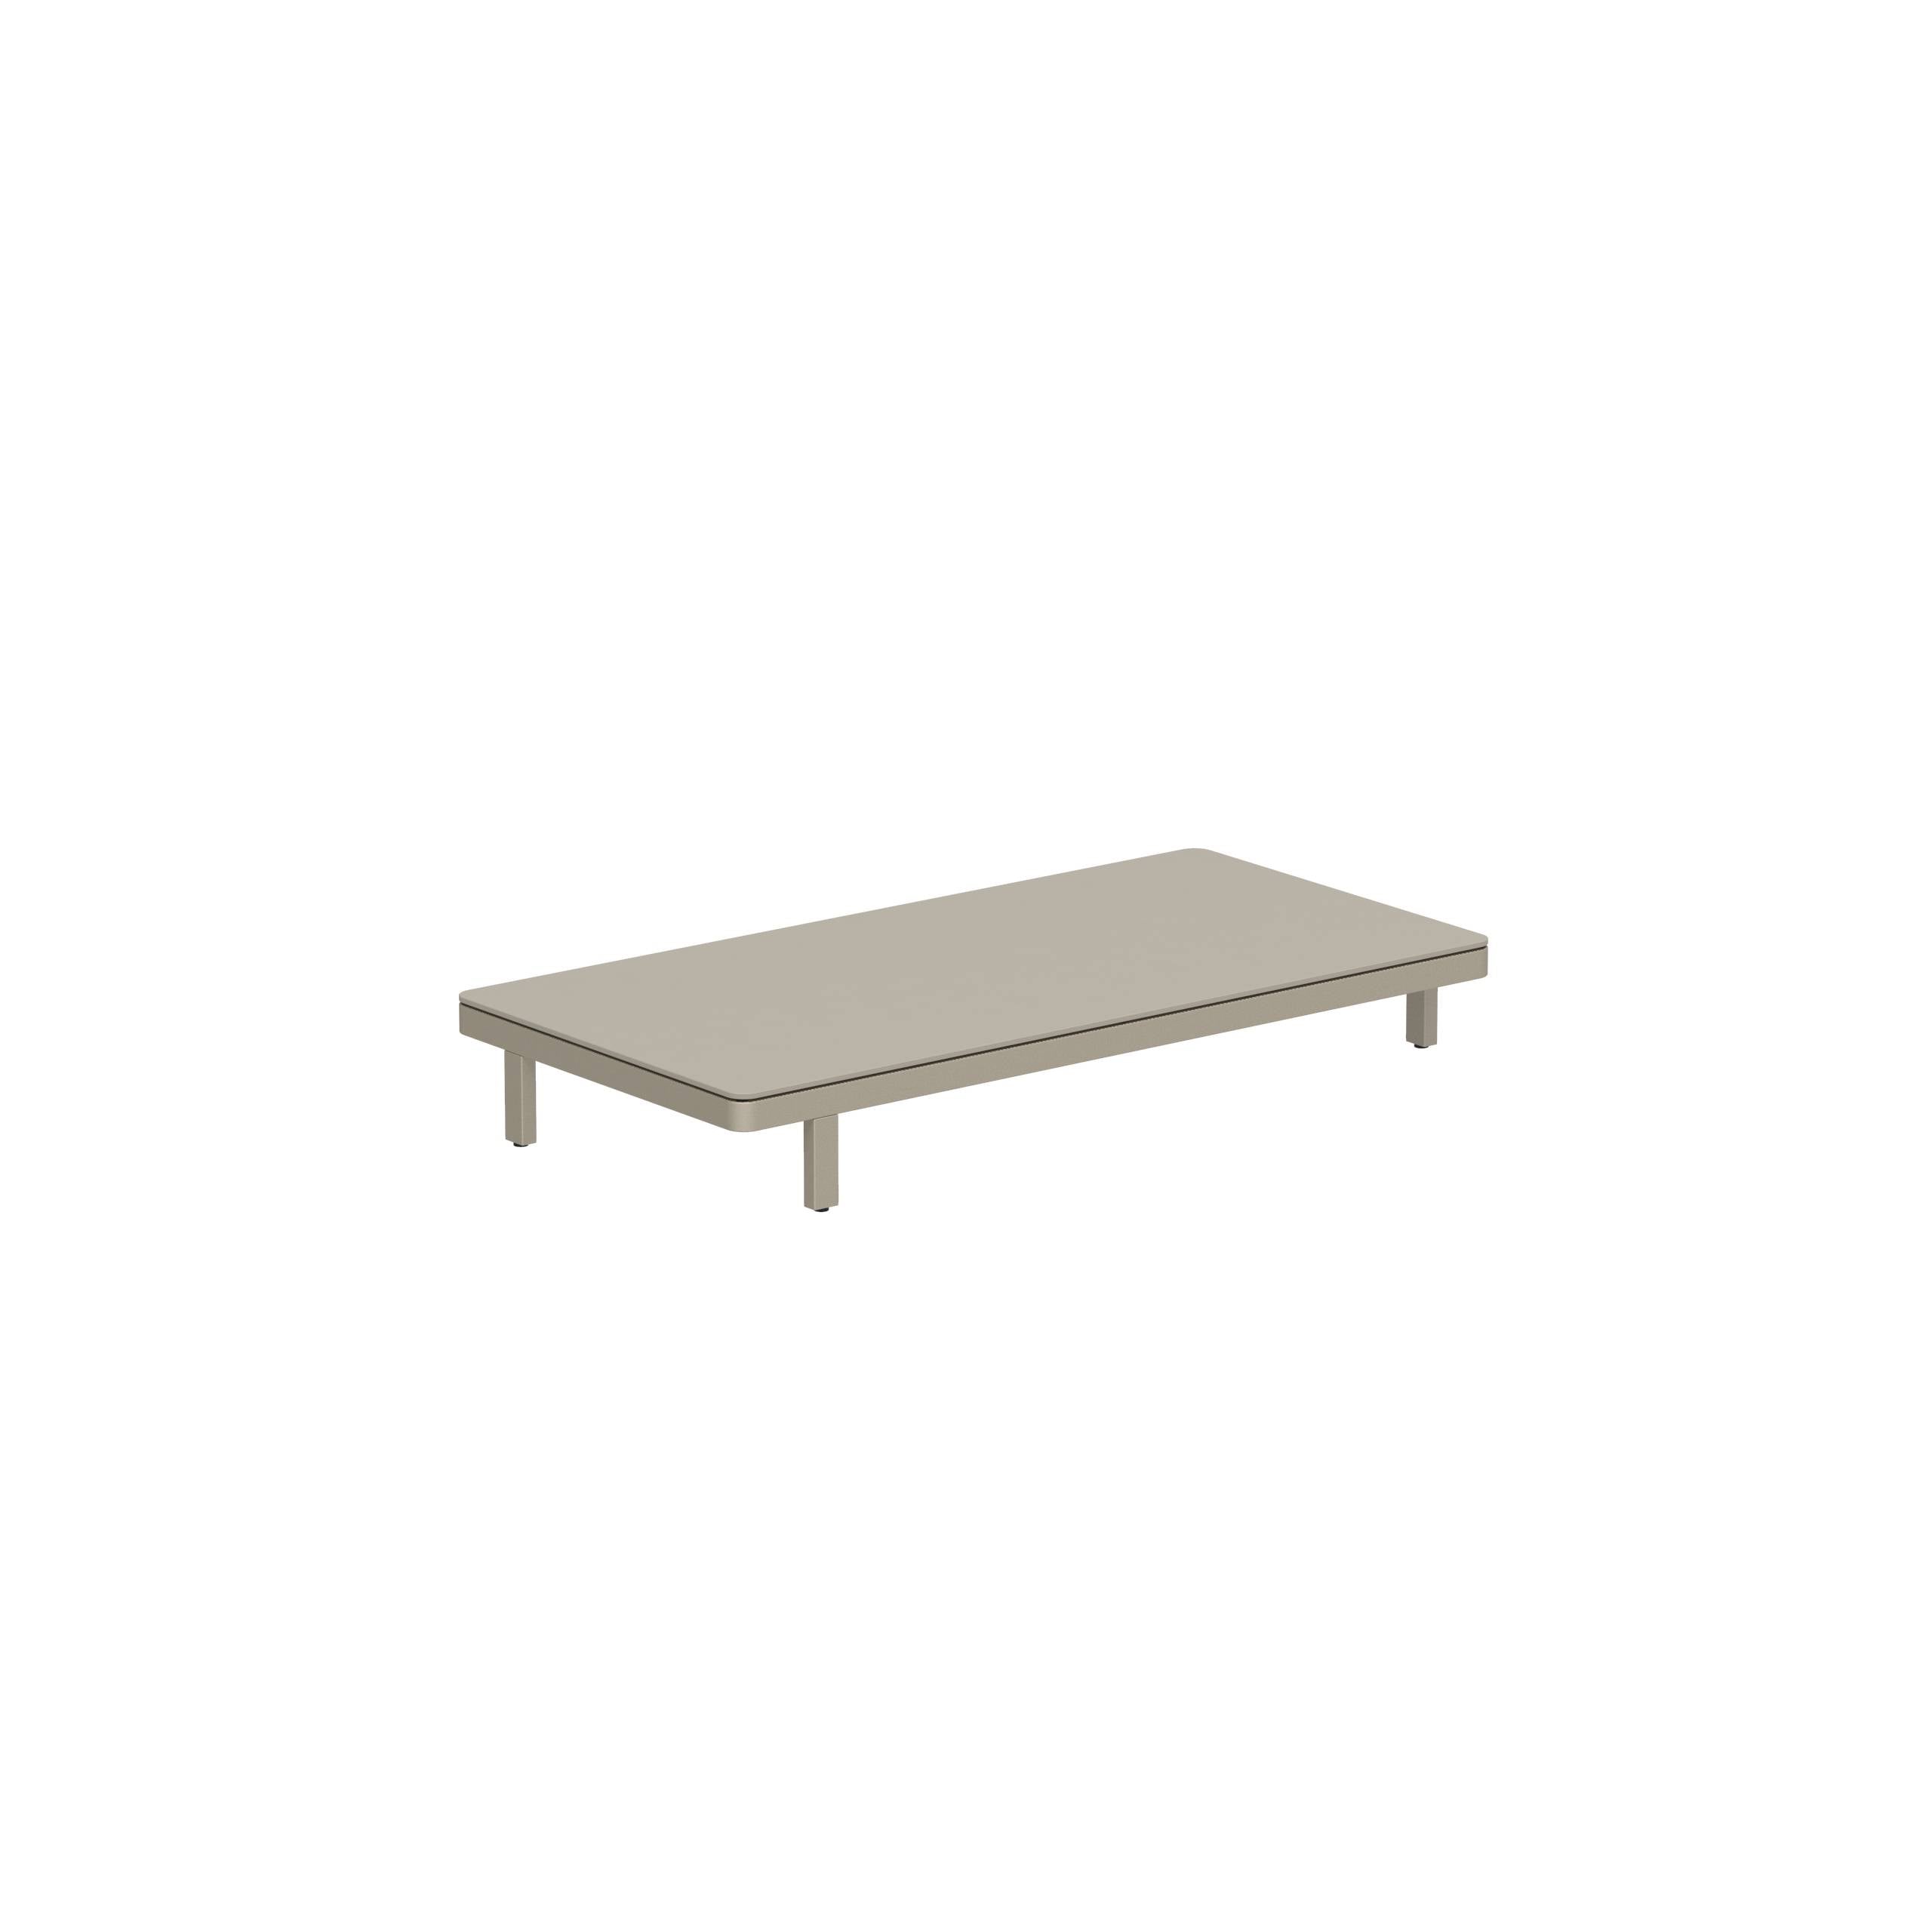 Alura Lounge 160 Ltl Table 160x80x23cm Sand Tabletop Ceramic Pearl Grey